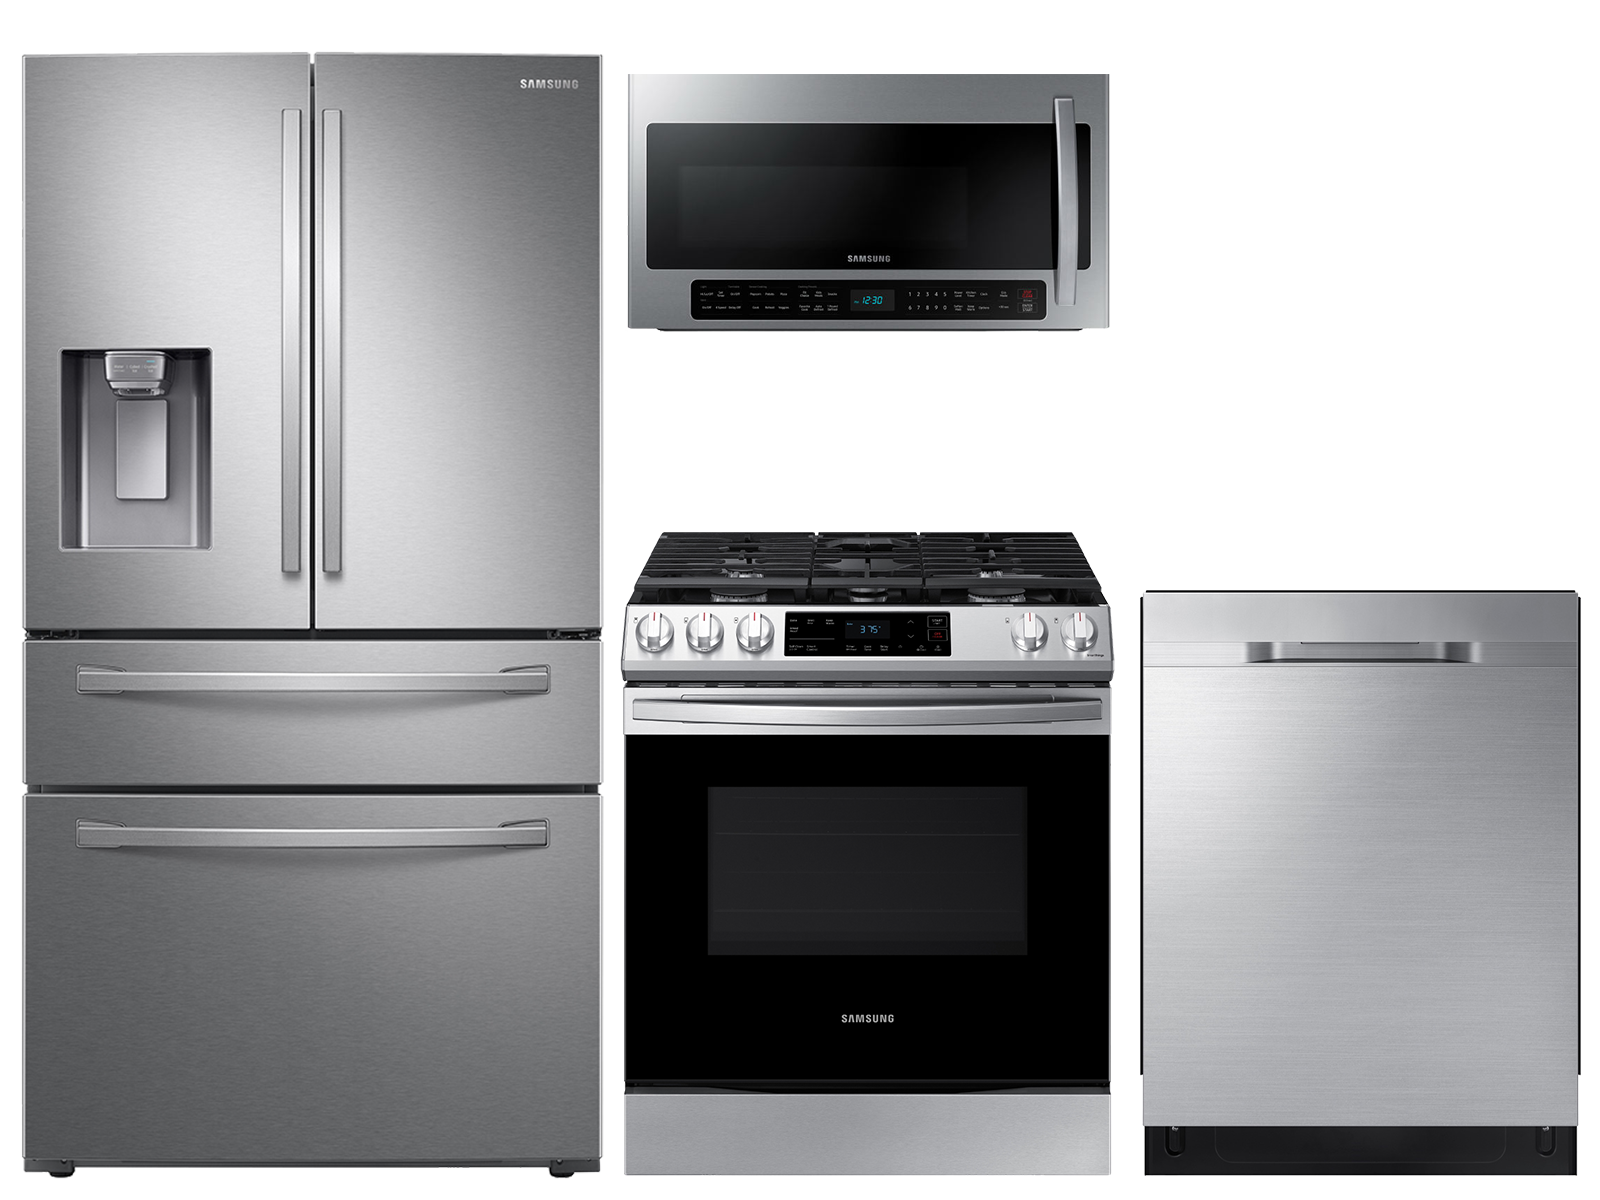 Samsung 28 cu. ft. 4-door refrigerator, gas range, 2.1 cu. ft. microwave and dishwasher package(BNDL-1612904217692)